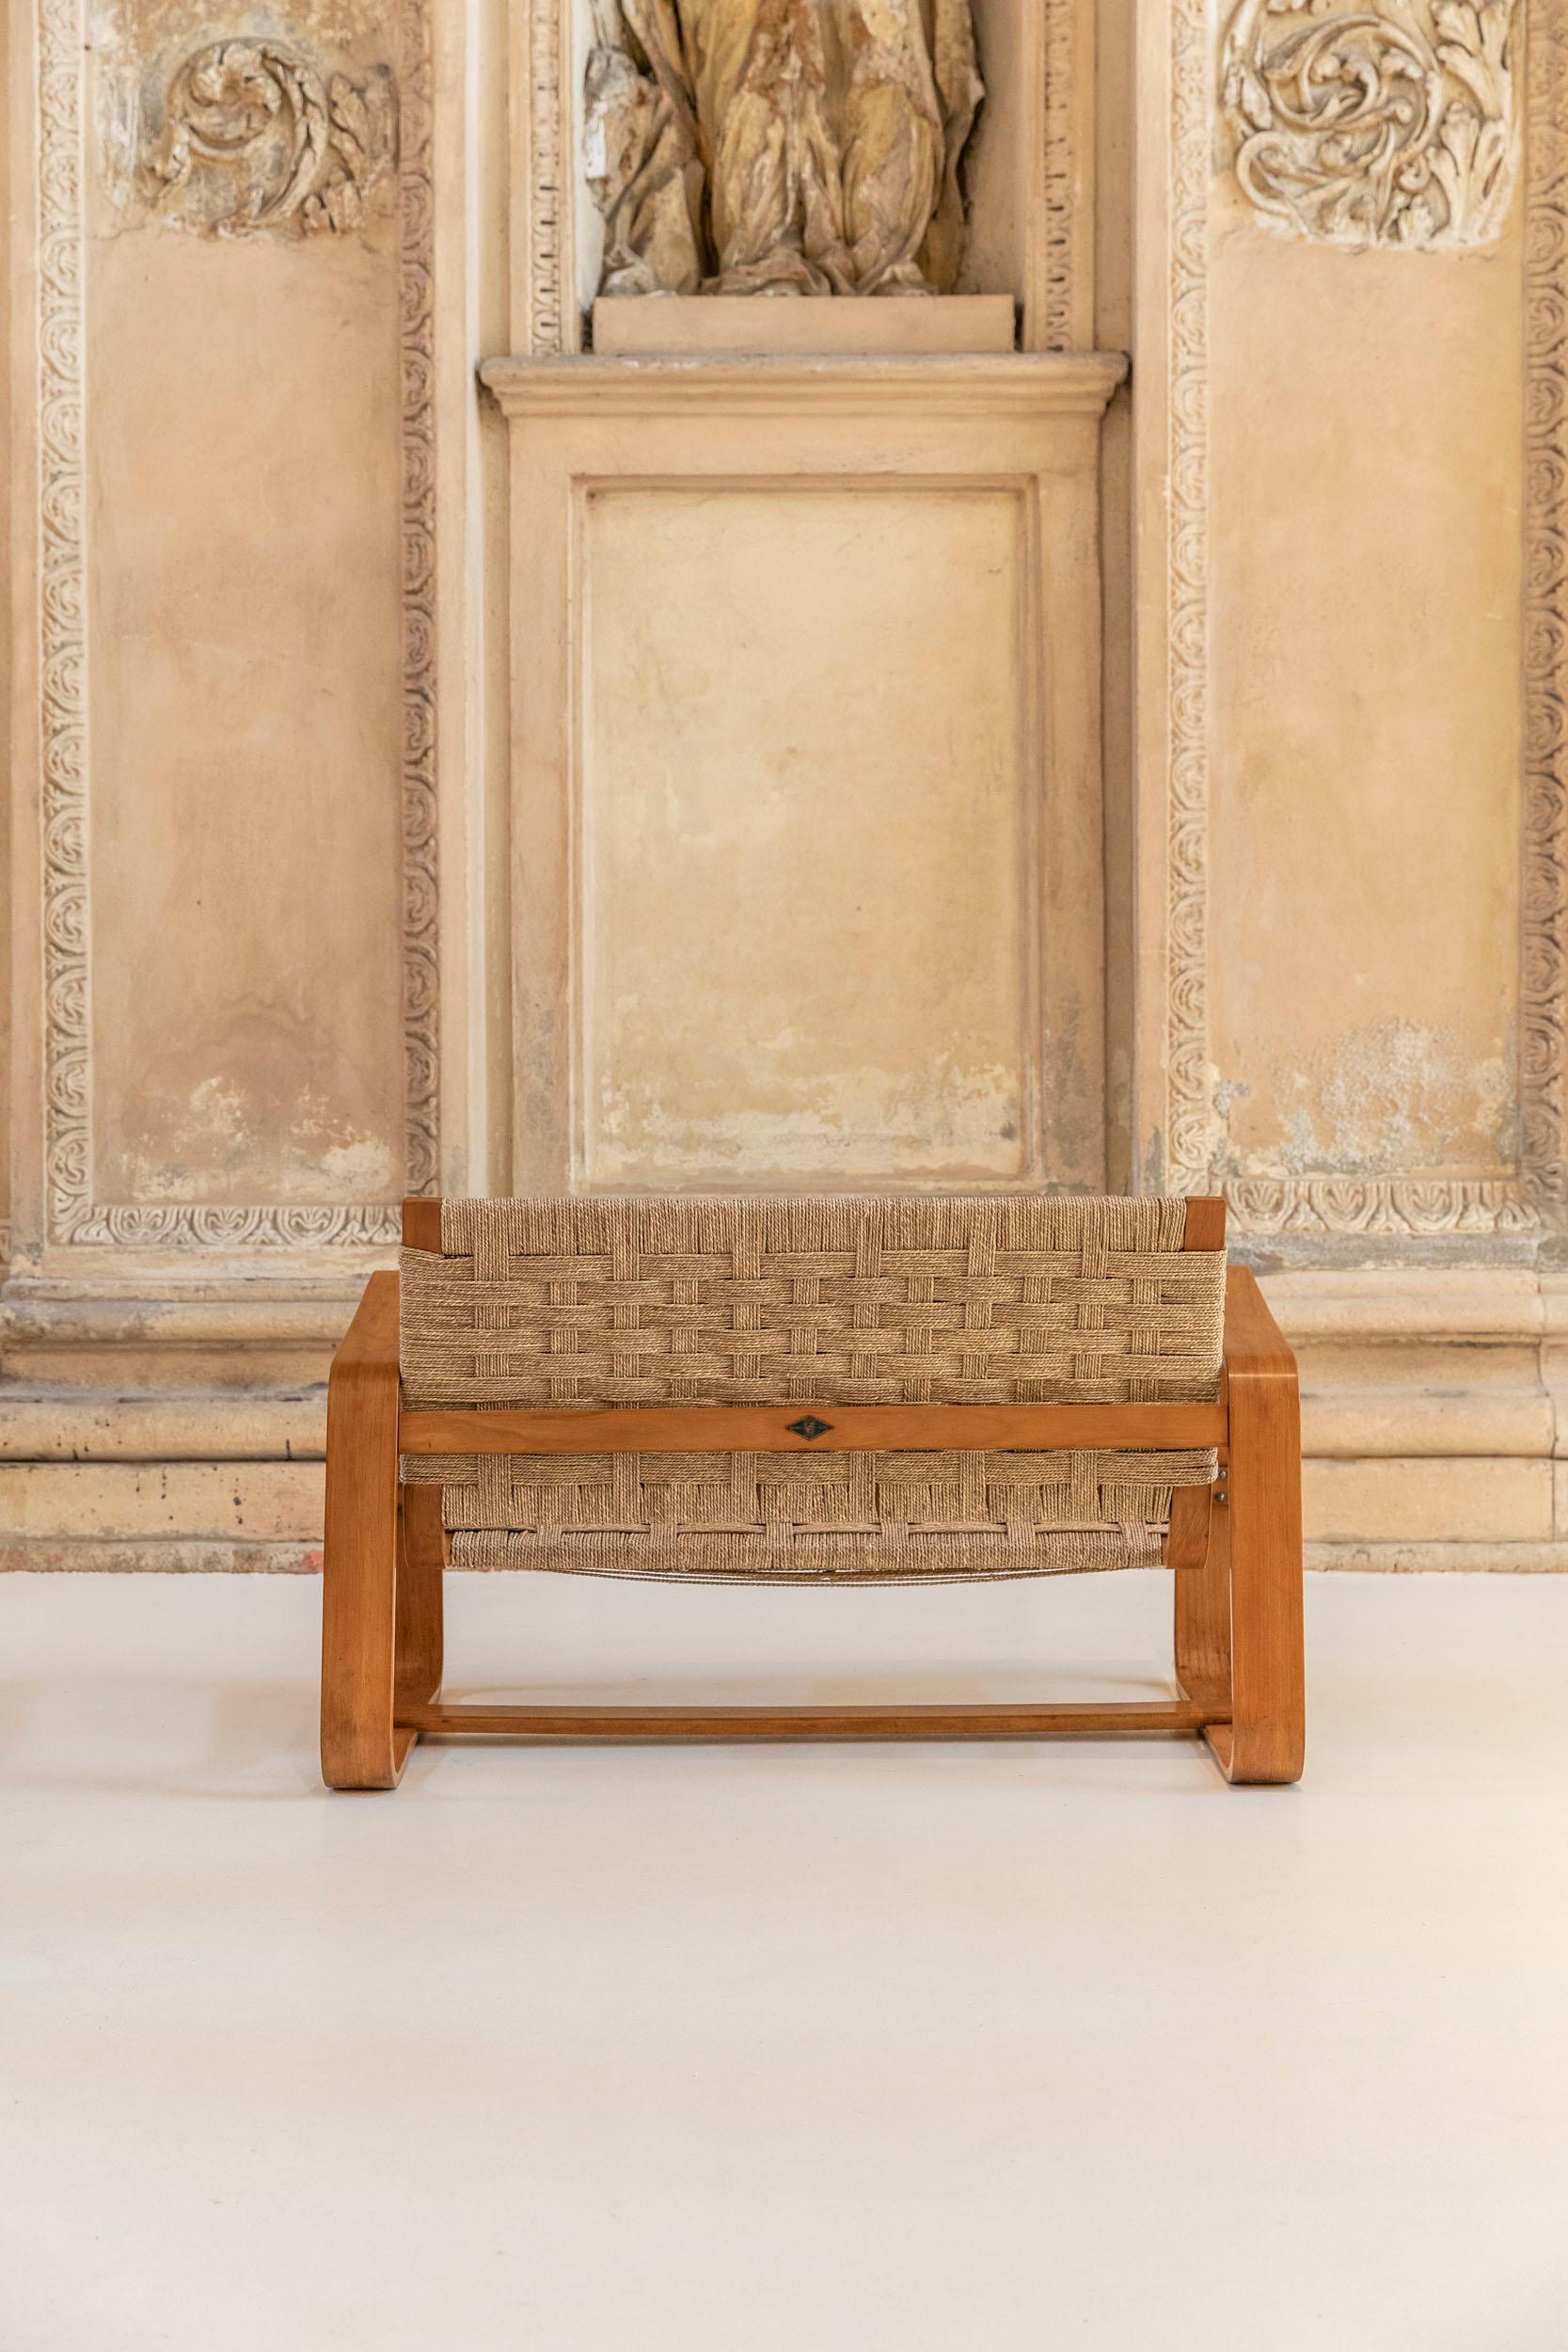 Giuseppe Pagano Pogatschnig Sofa In Excellent Condition In Piacenza, Italy